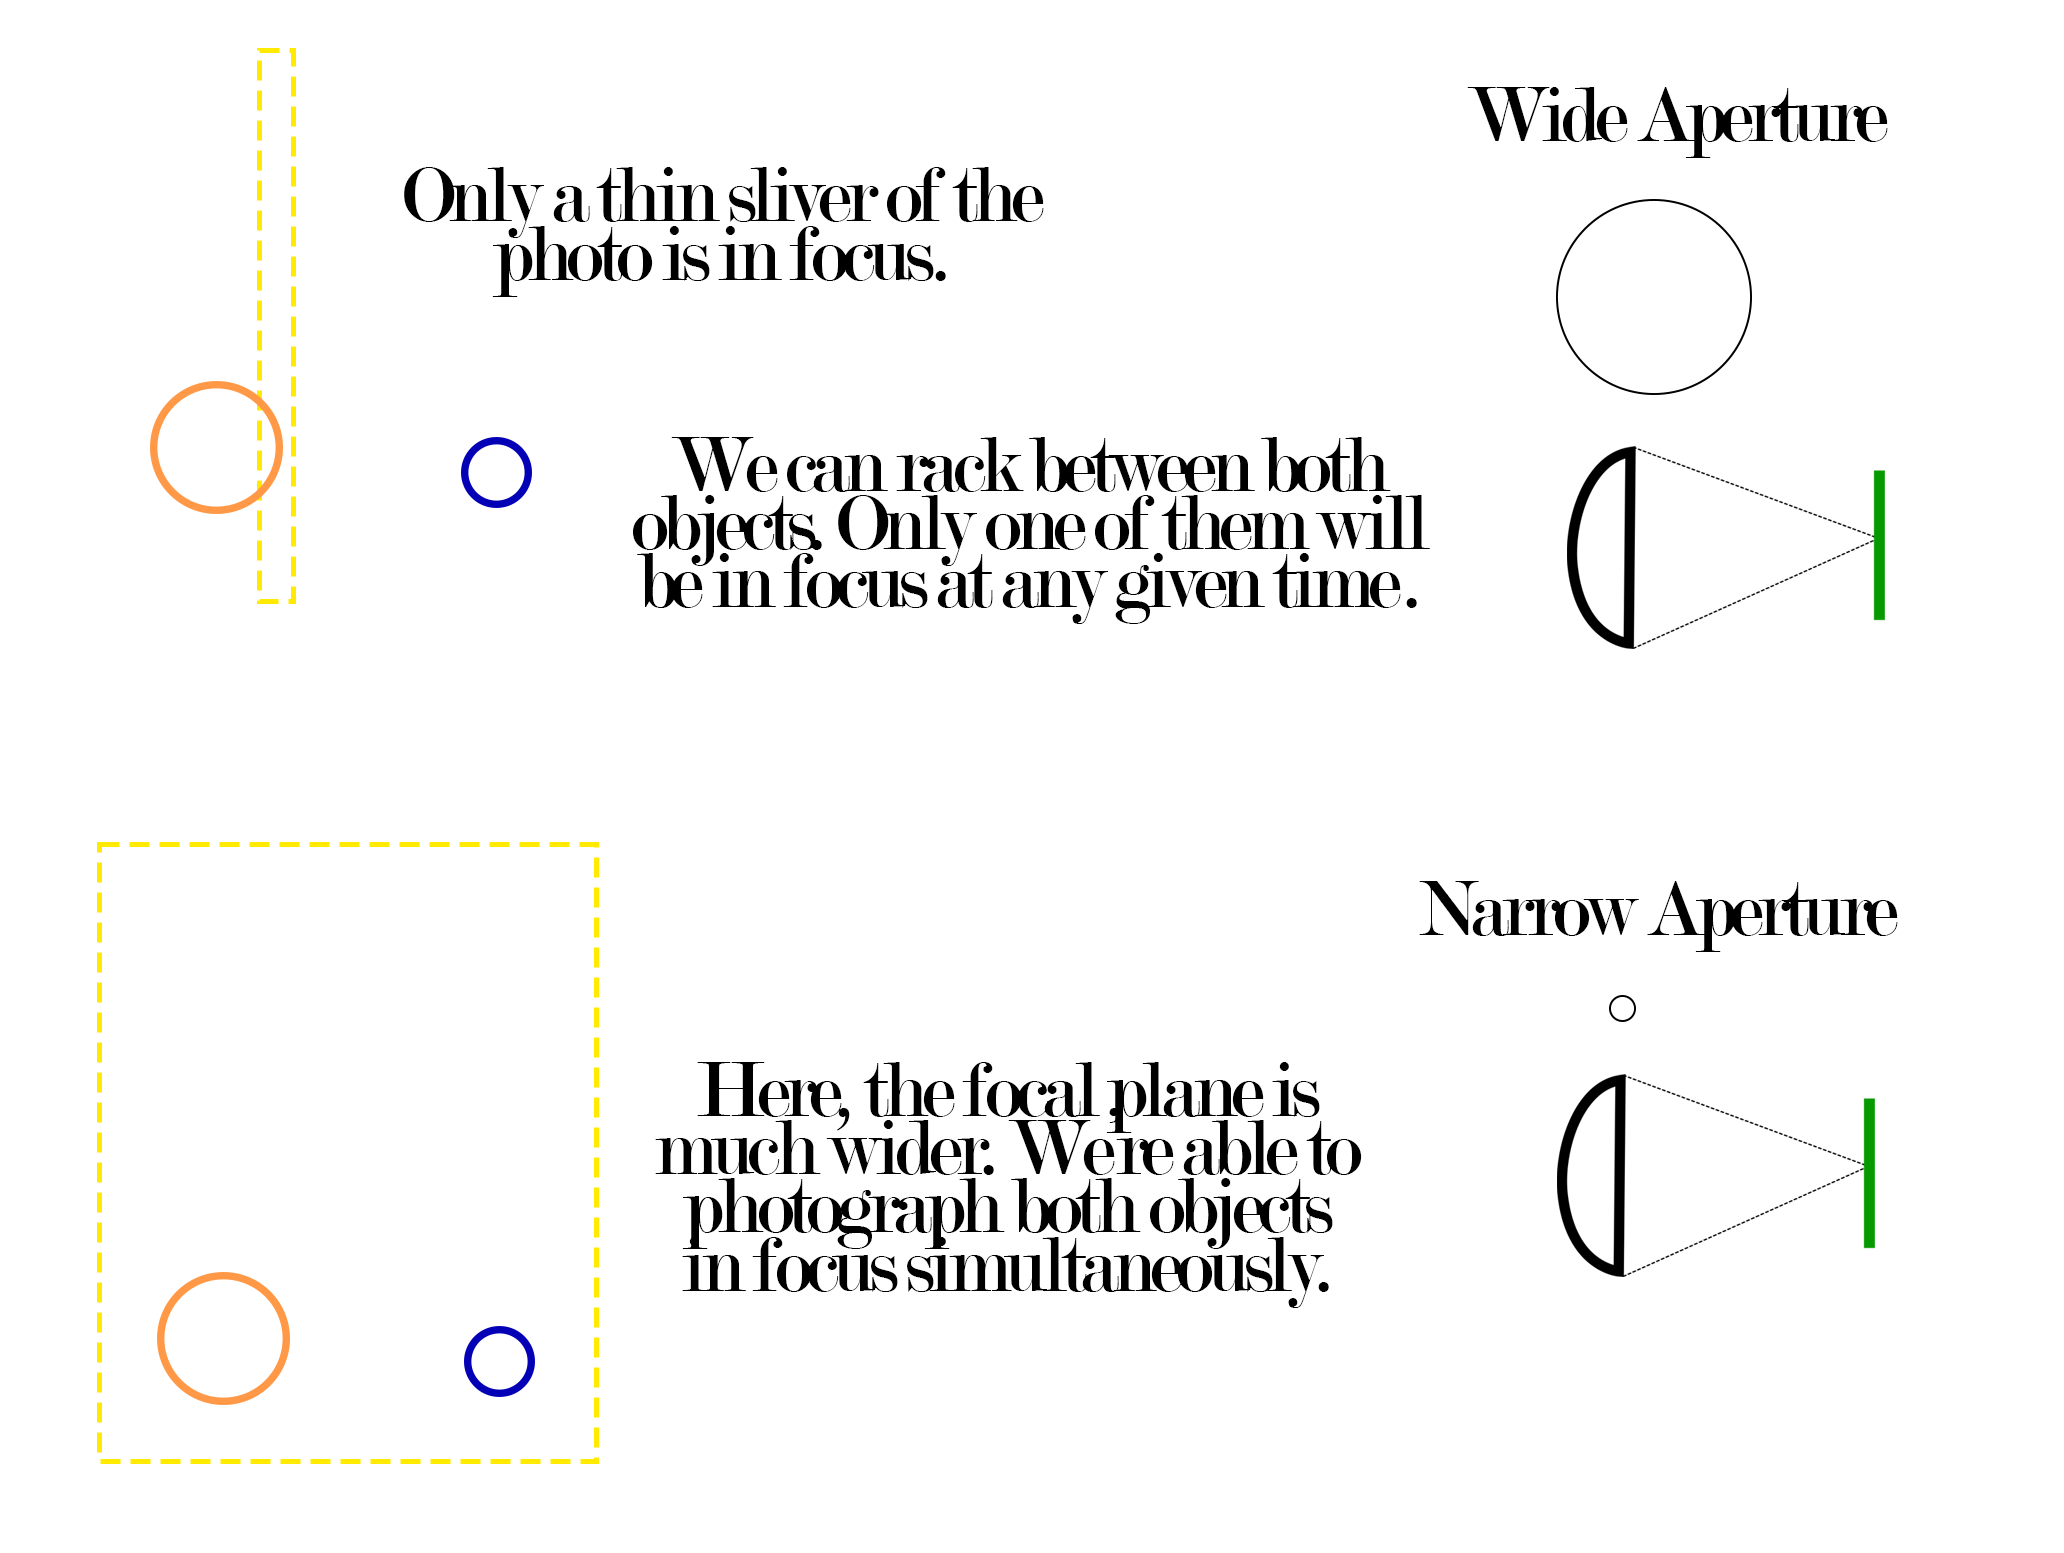 Wide aperture vs. narrow aperture when rack focusing.